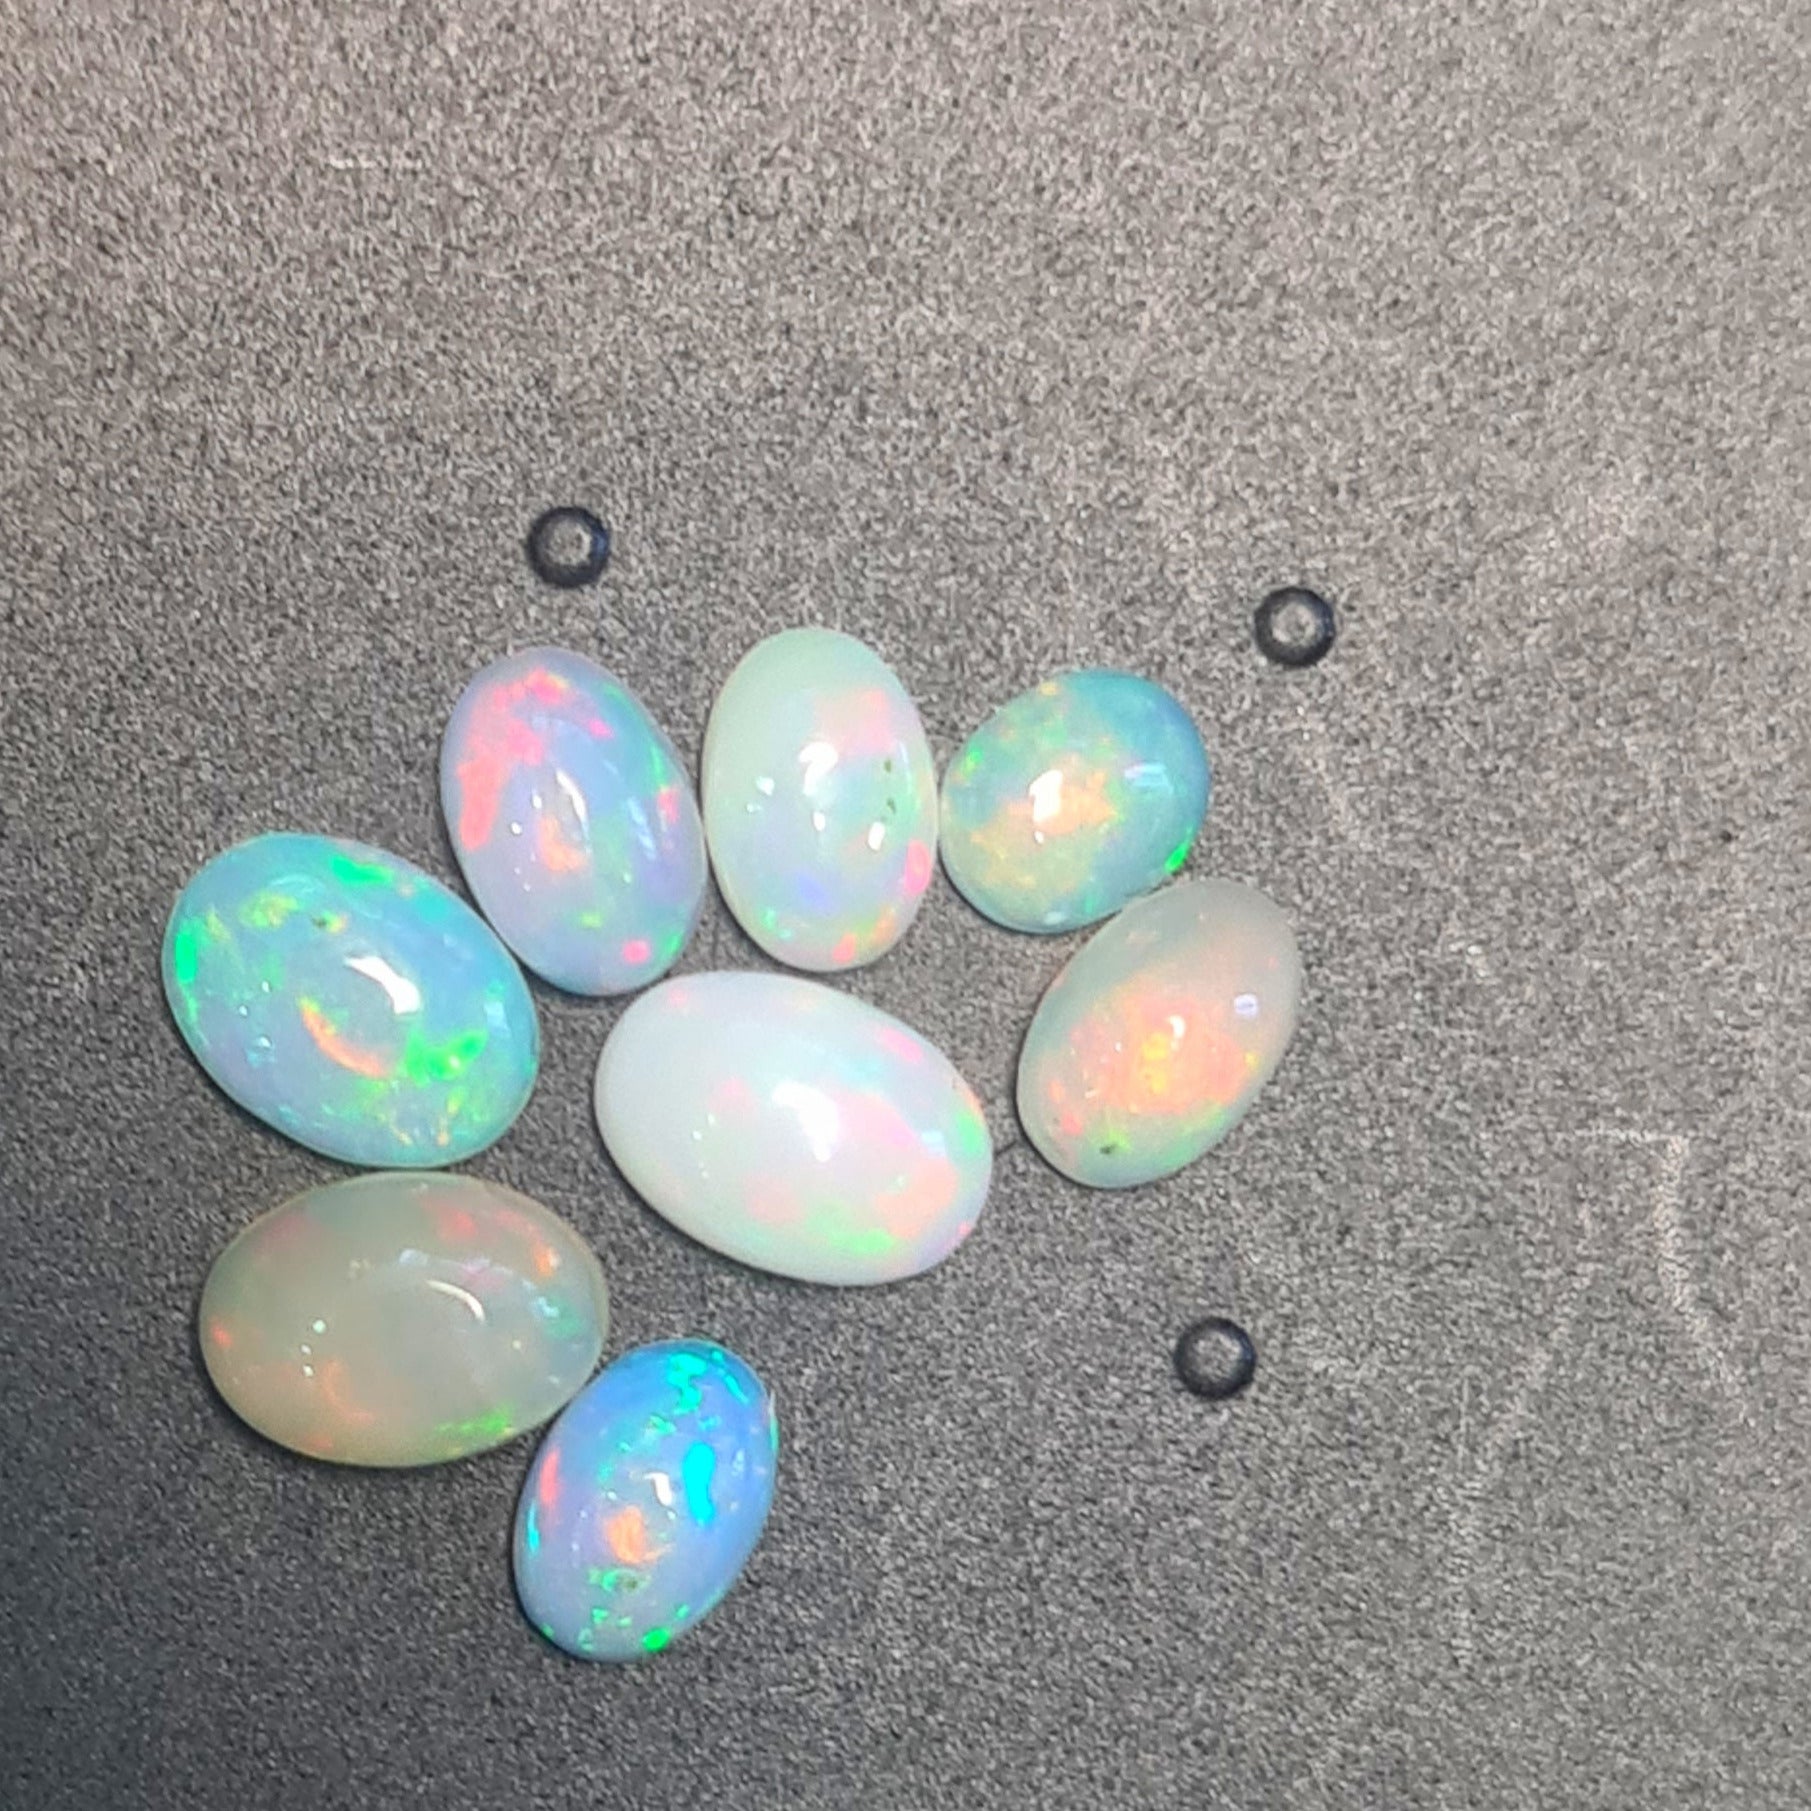 8 Pcs Natural Opal Cabochon Gemstone Shape: Oval| Size:5-7mm - The LabradoriteKing